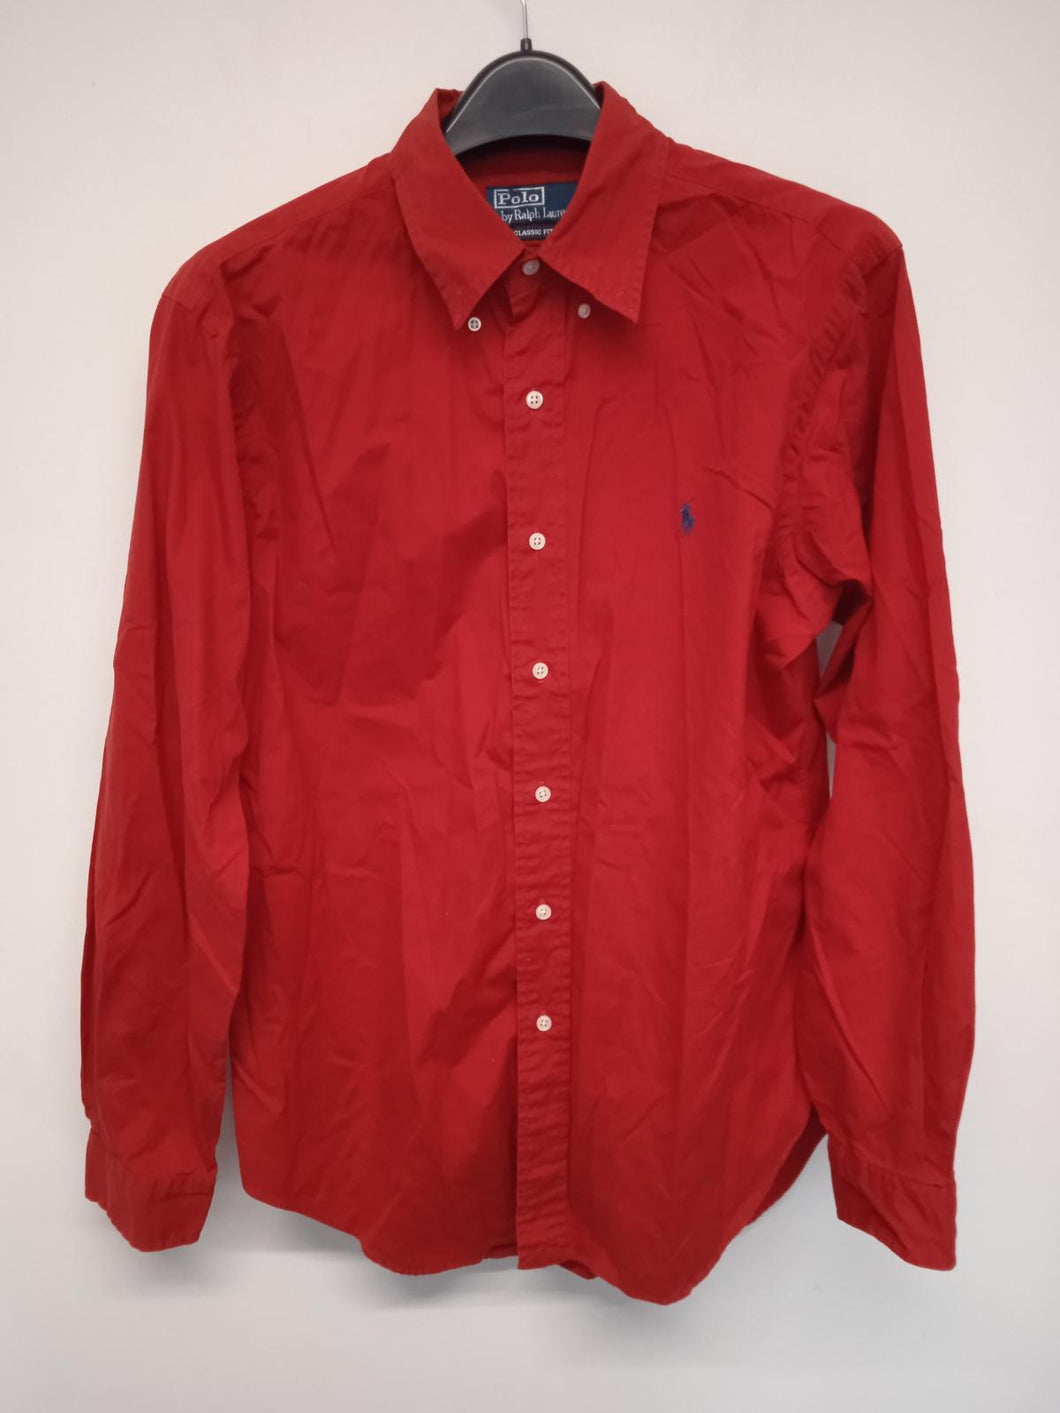 POLO RALPH LAUREN Men's Red Cotton Long Sleeve Button-Up Classic Shirt Size M